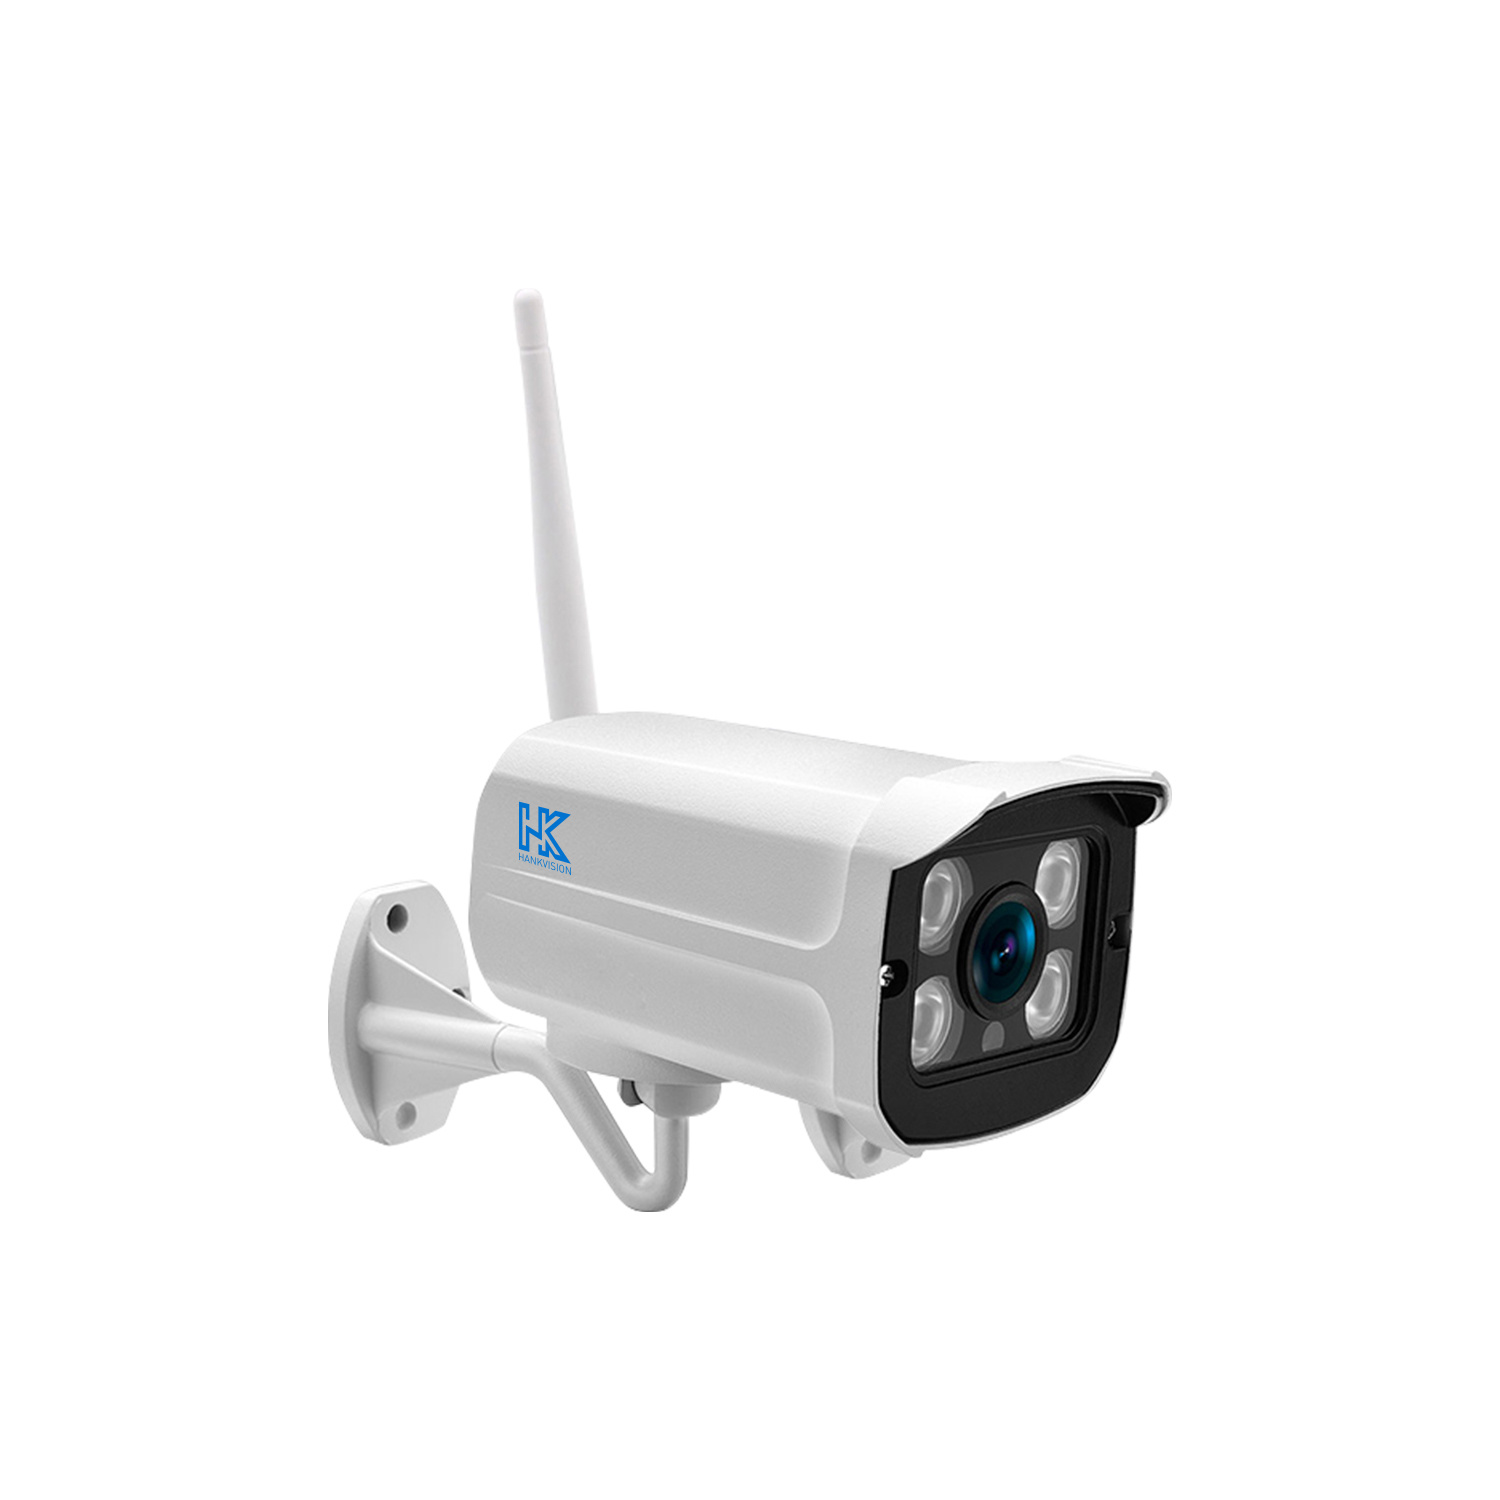 Hankvision WiFi NVR Kit 5MP Home Security System Wireless Kit 2.4G WiFi 4CH CCTV Camera